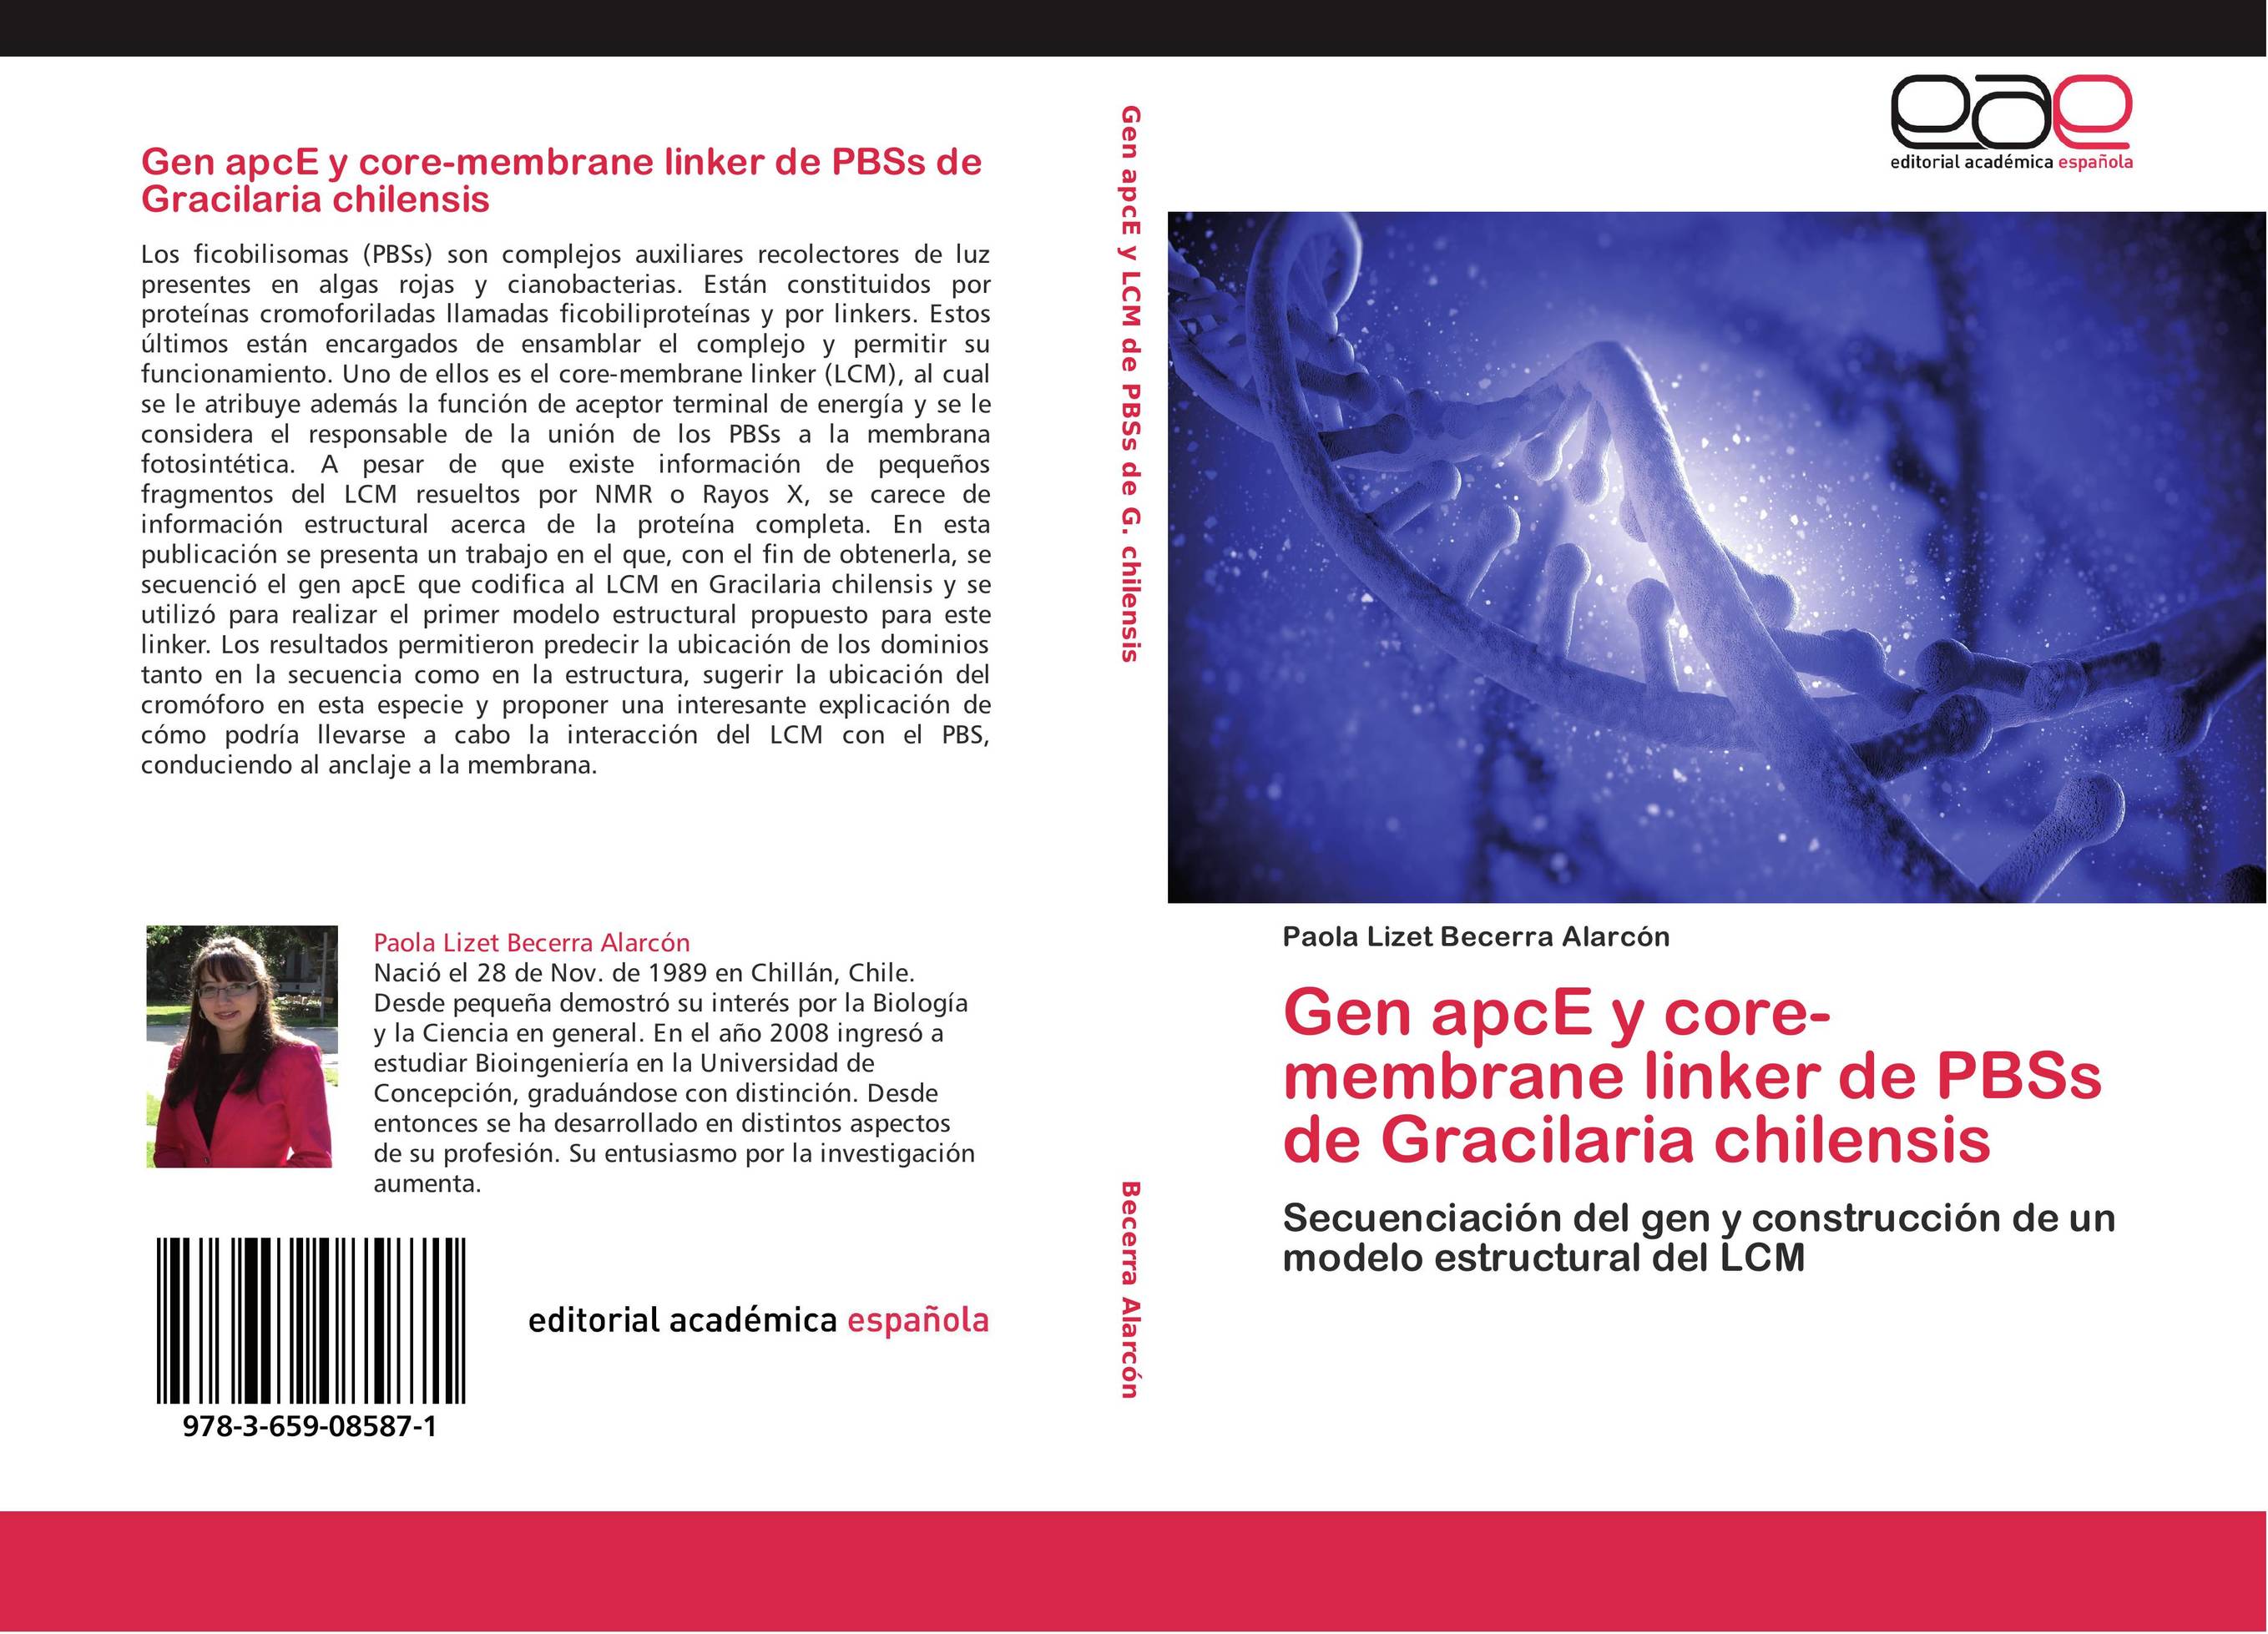 Gen apcE y core-membrane linker de PBSs de Gracilaria chilensis